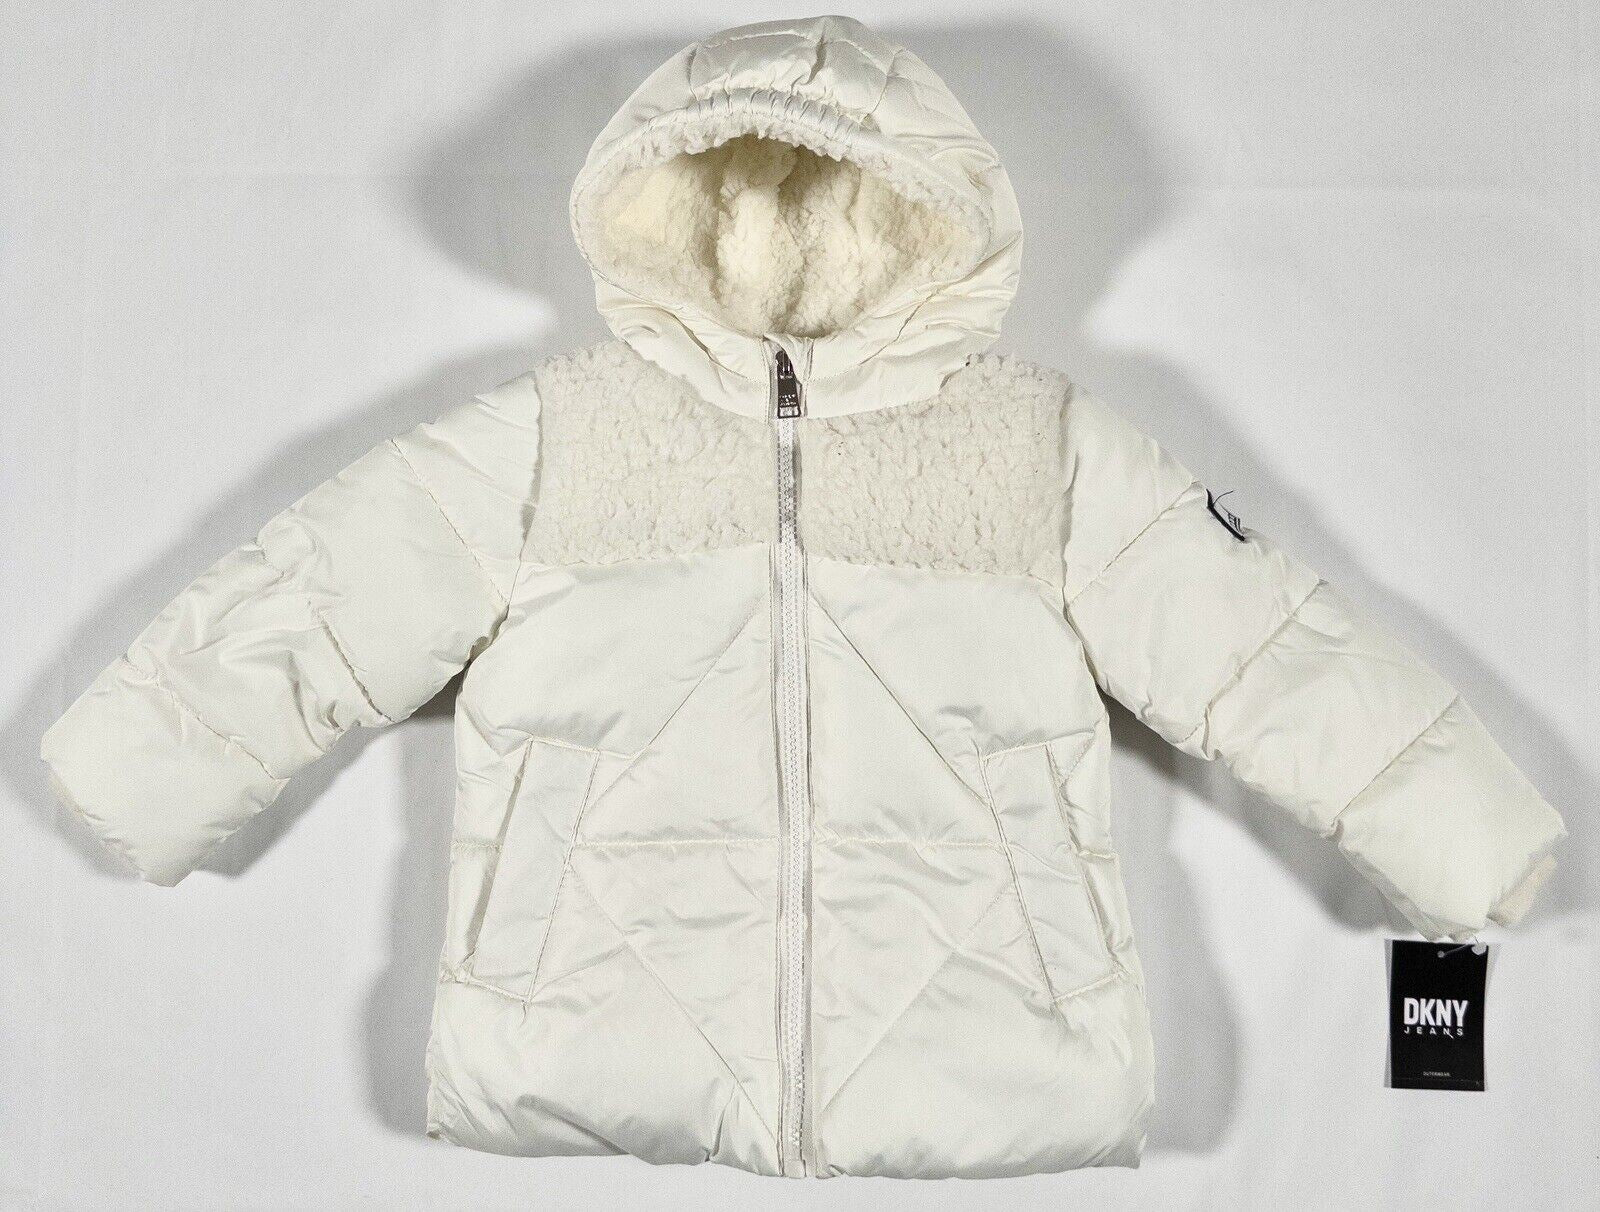 DKNY JEANS Kids Girls White Cream Coat Size UK 18 Months